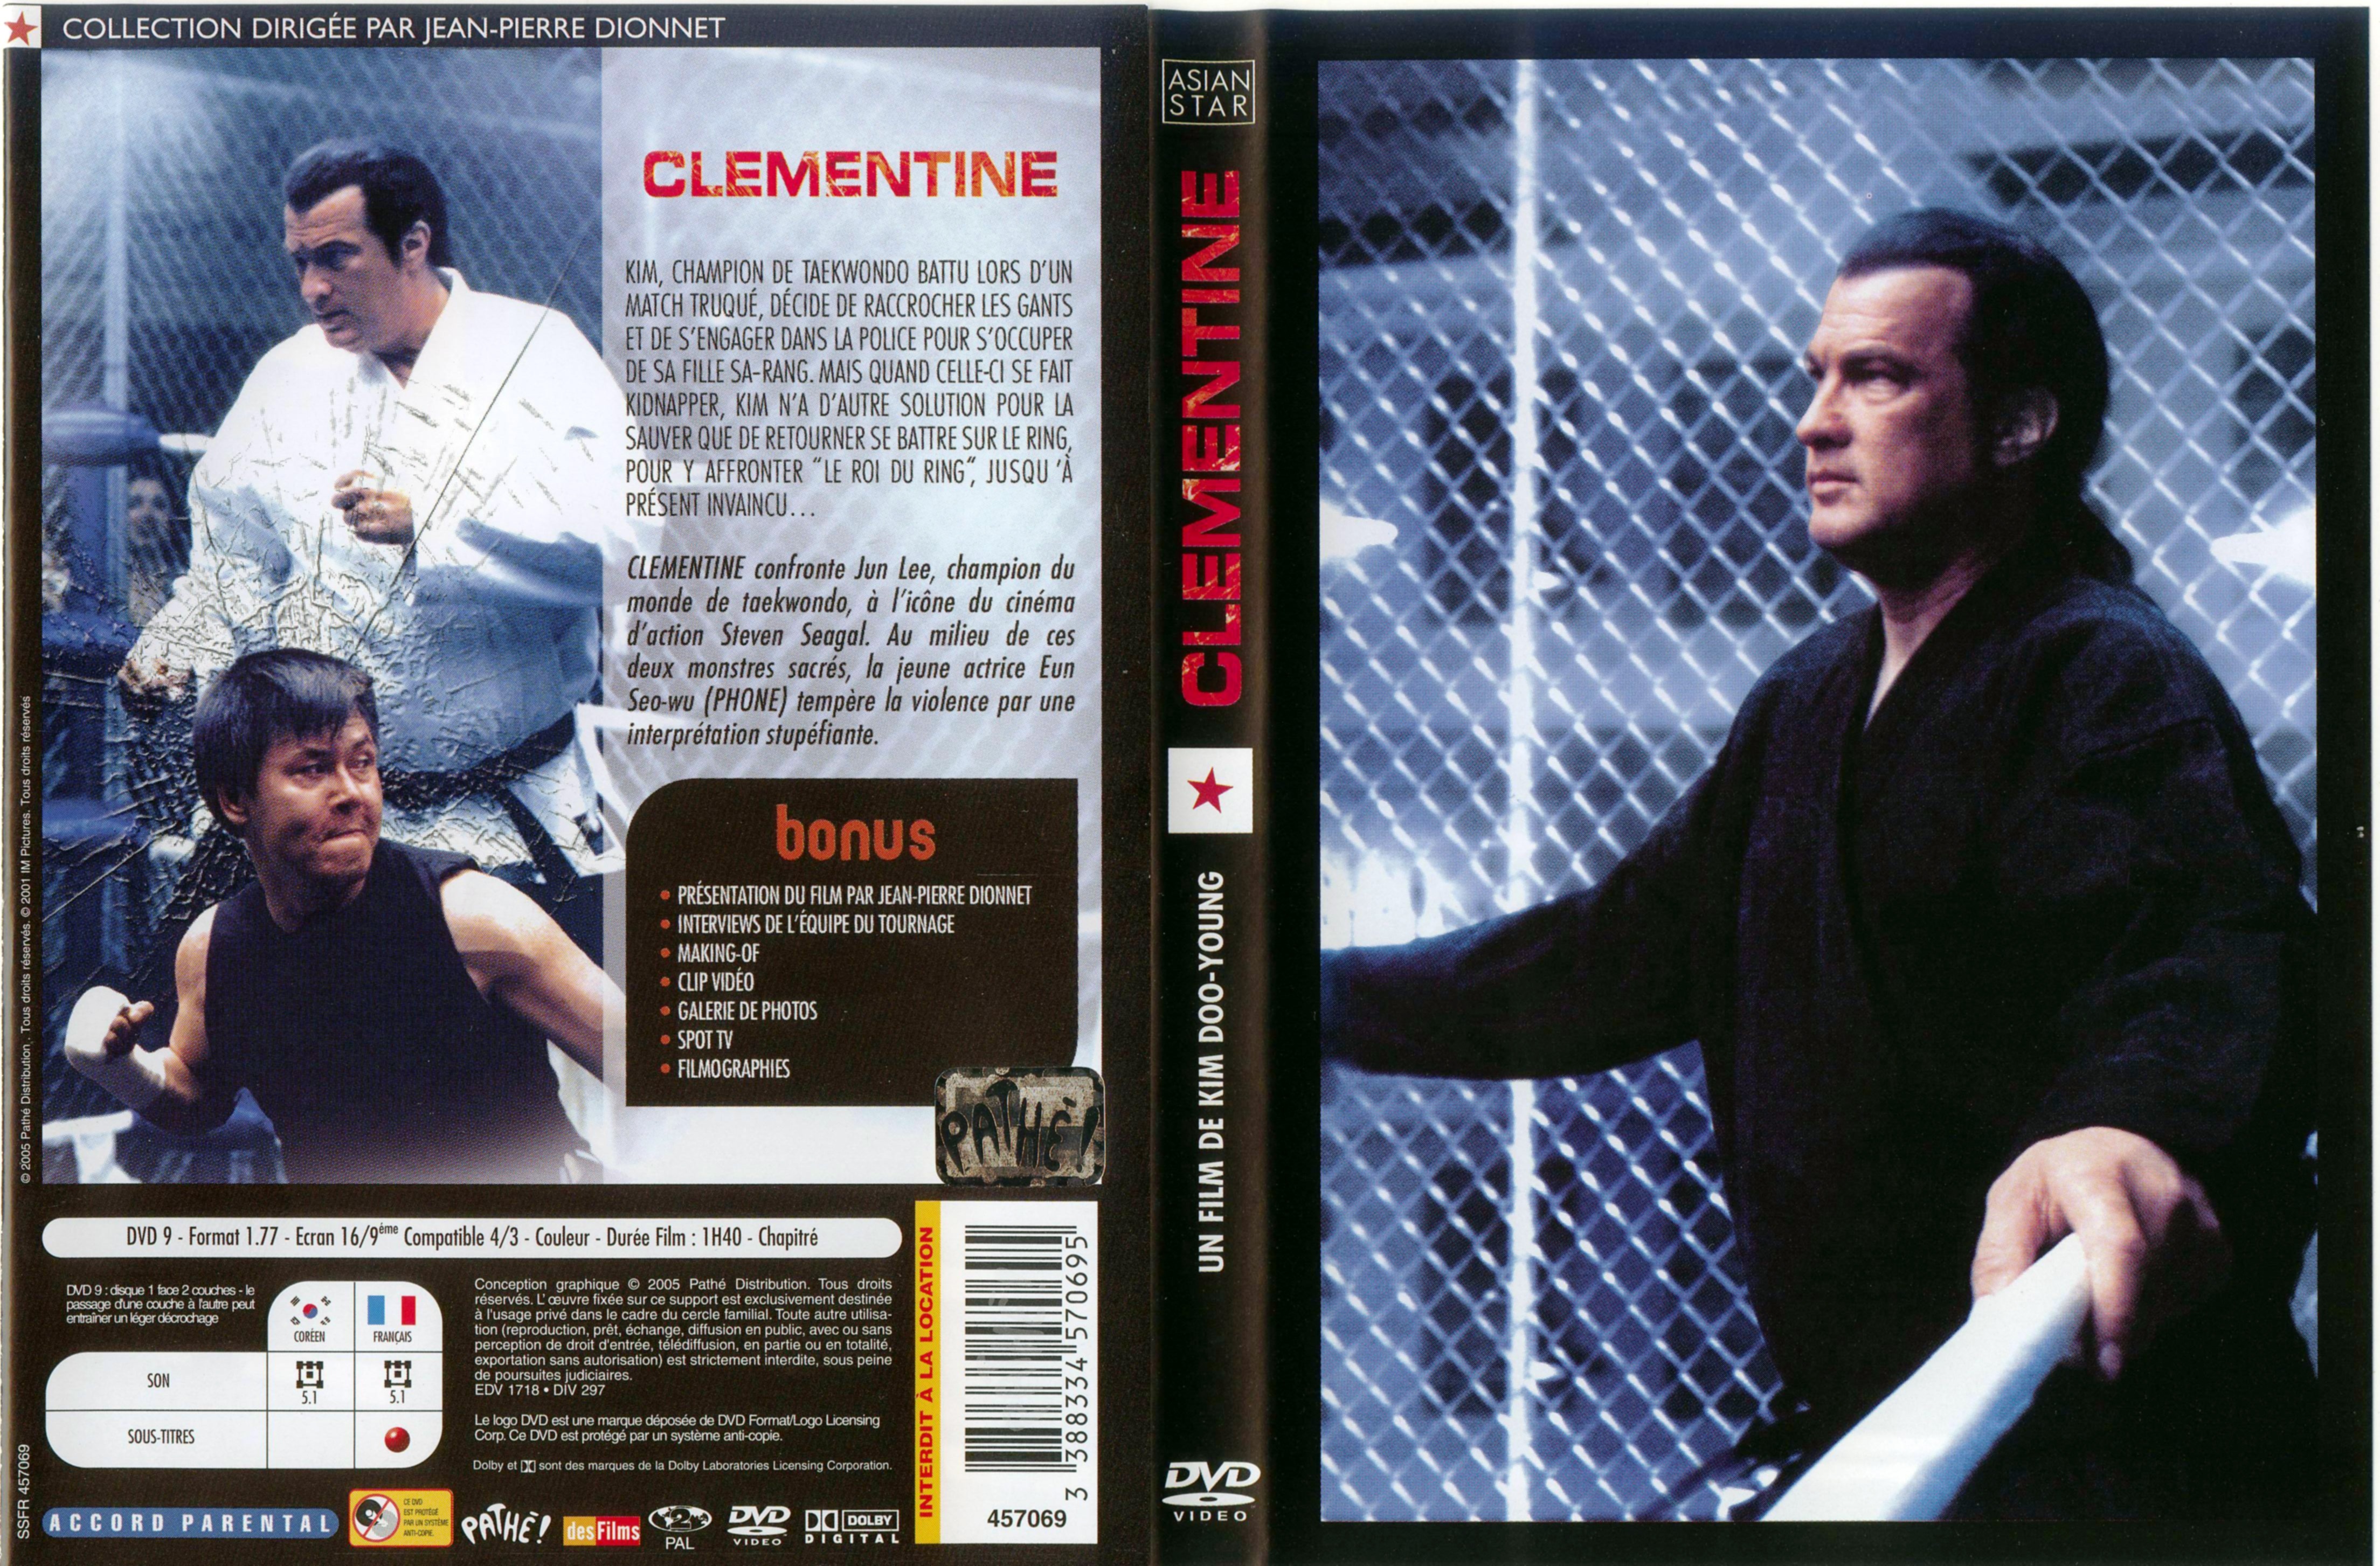 Jaquette DVD Clementine (Steven Seagal) v2